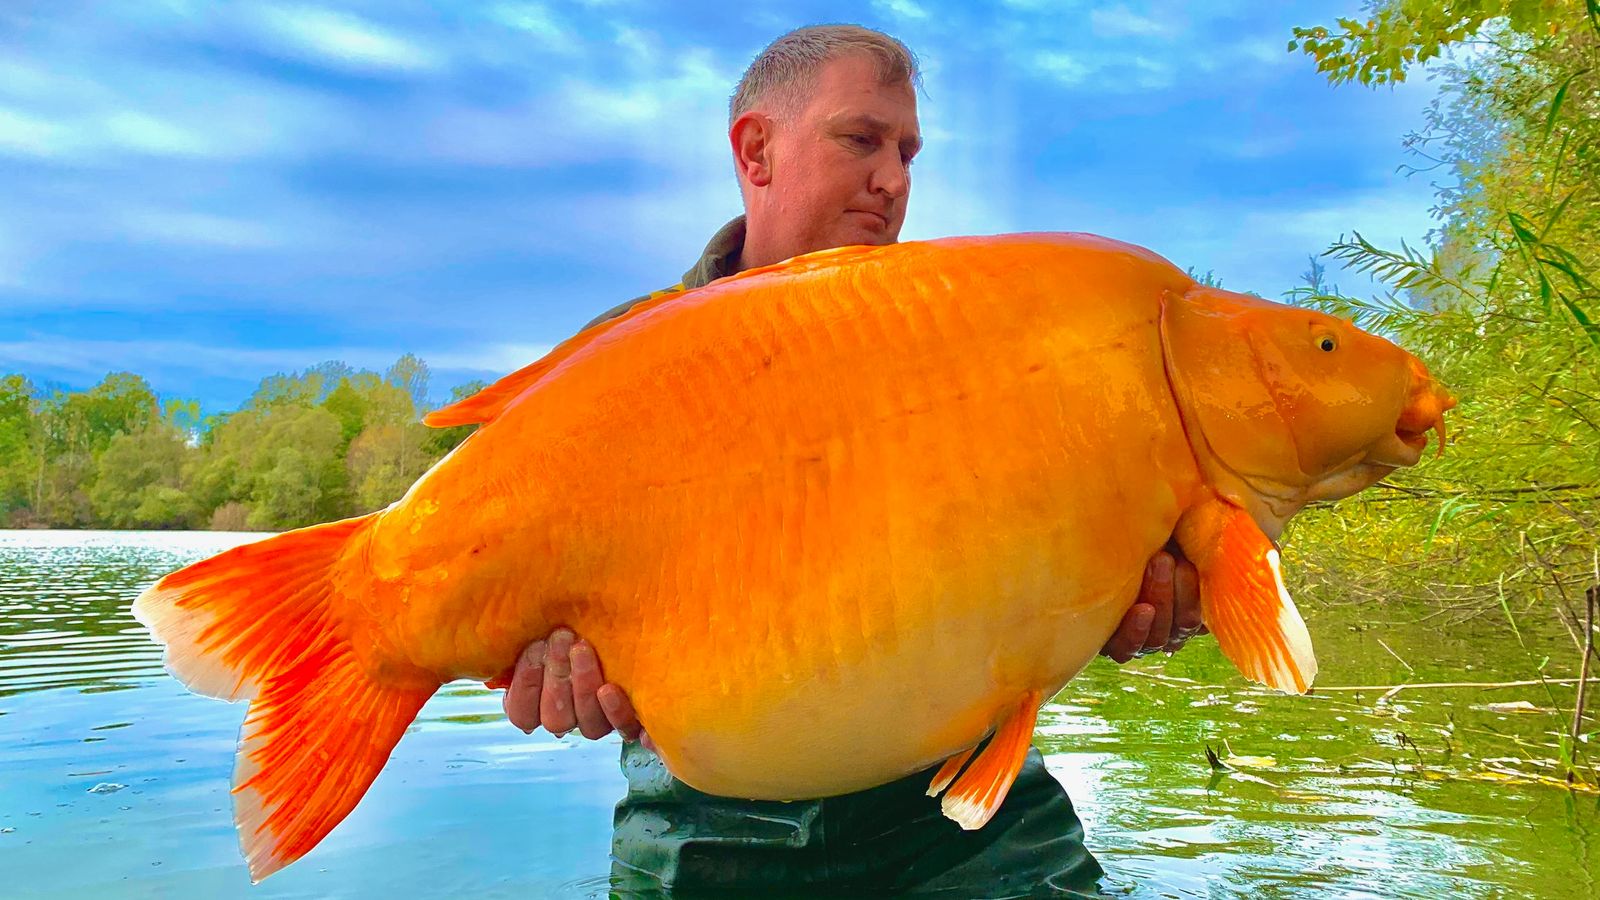 British angler catches orange carp nicknamed 'the Carrot' on